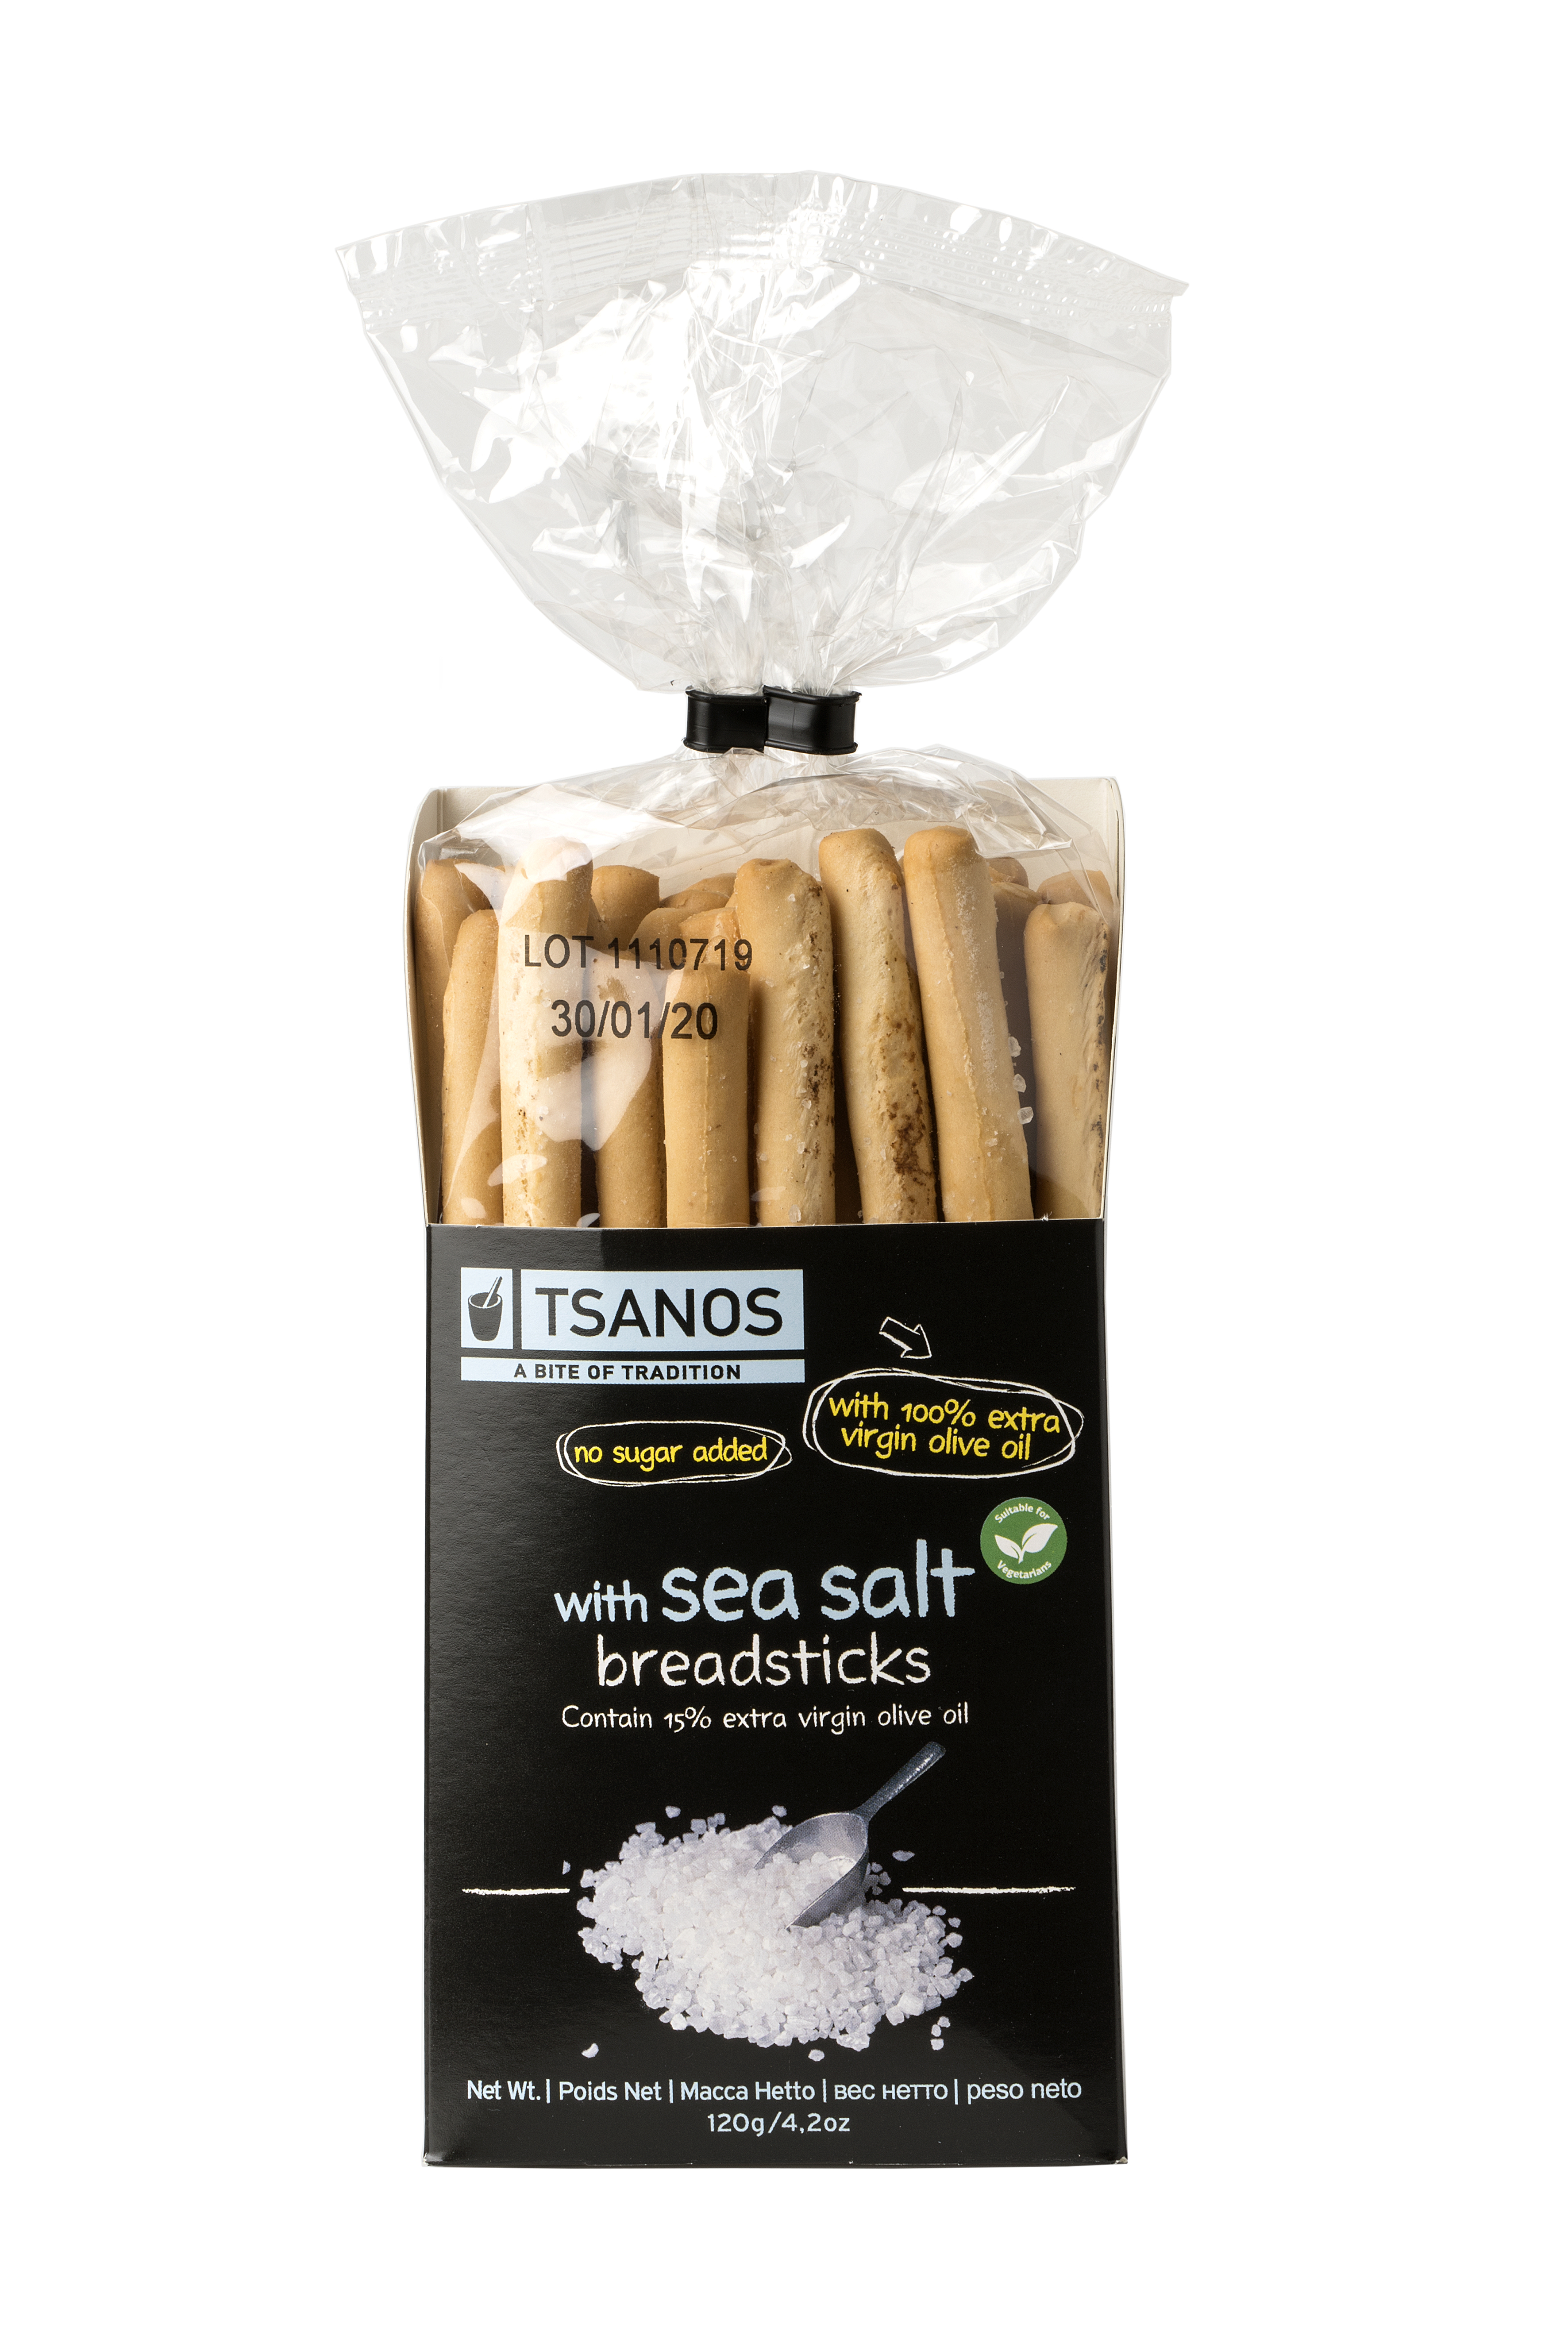 Breadsticks with sea salt